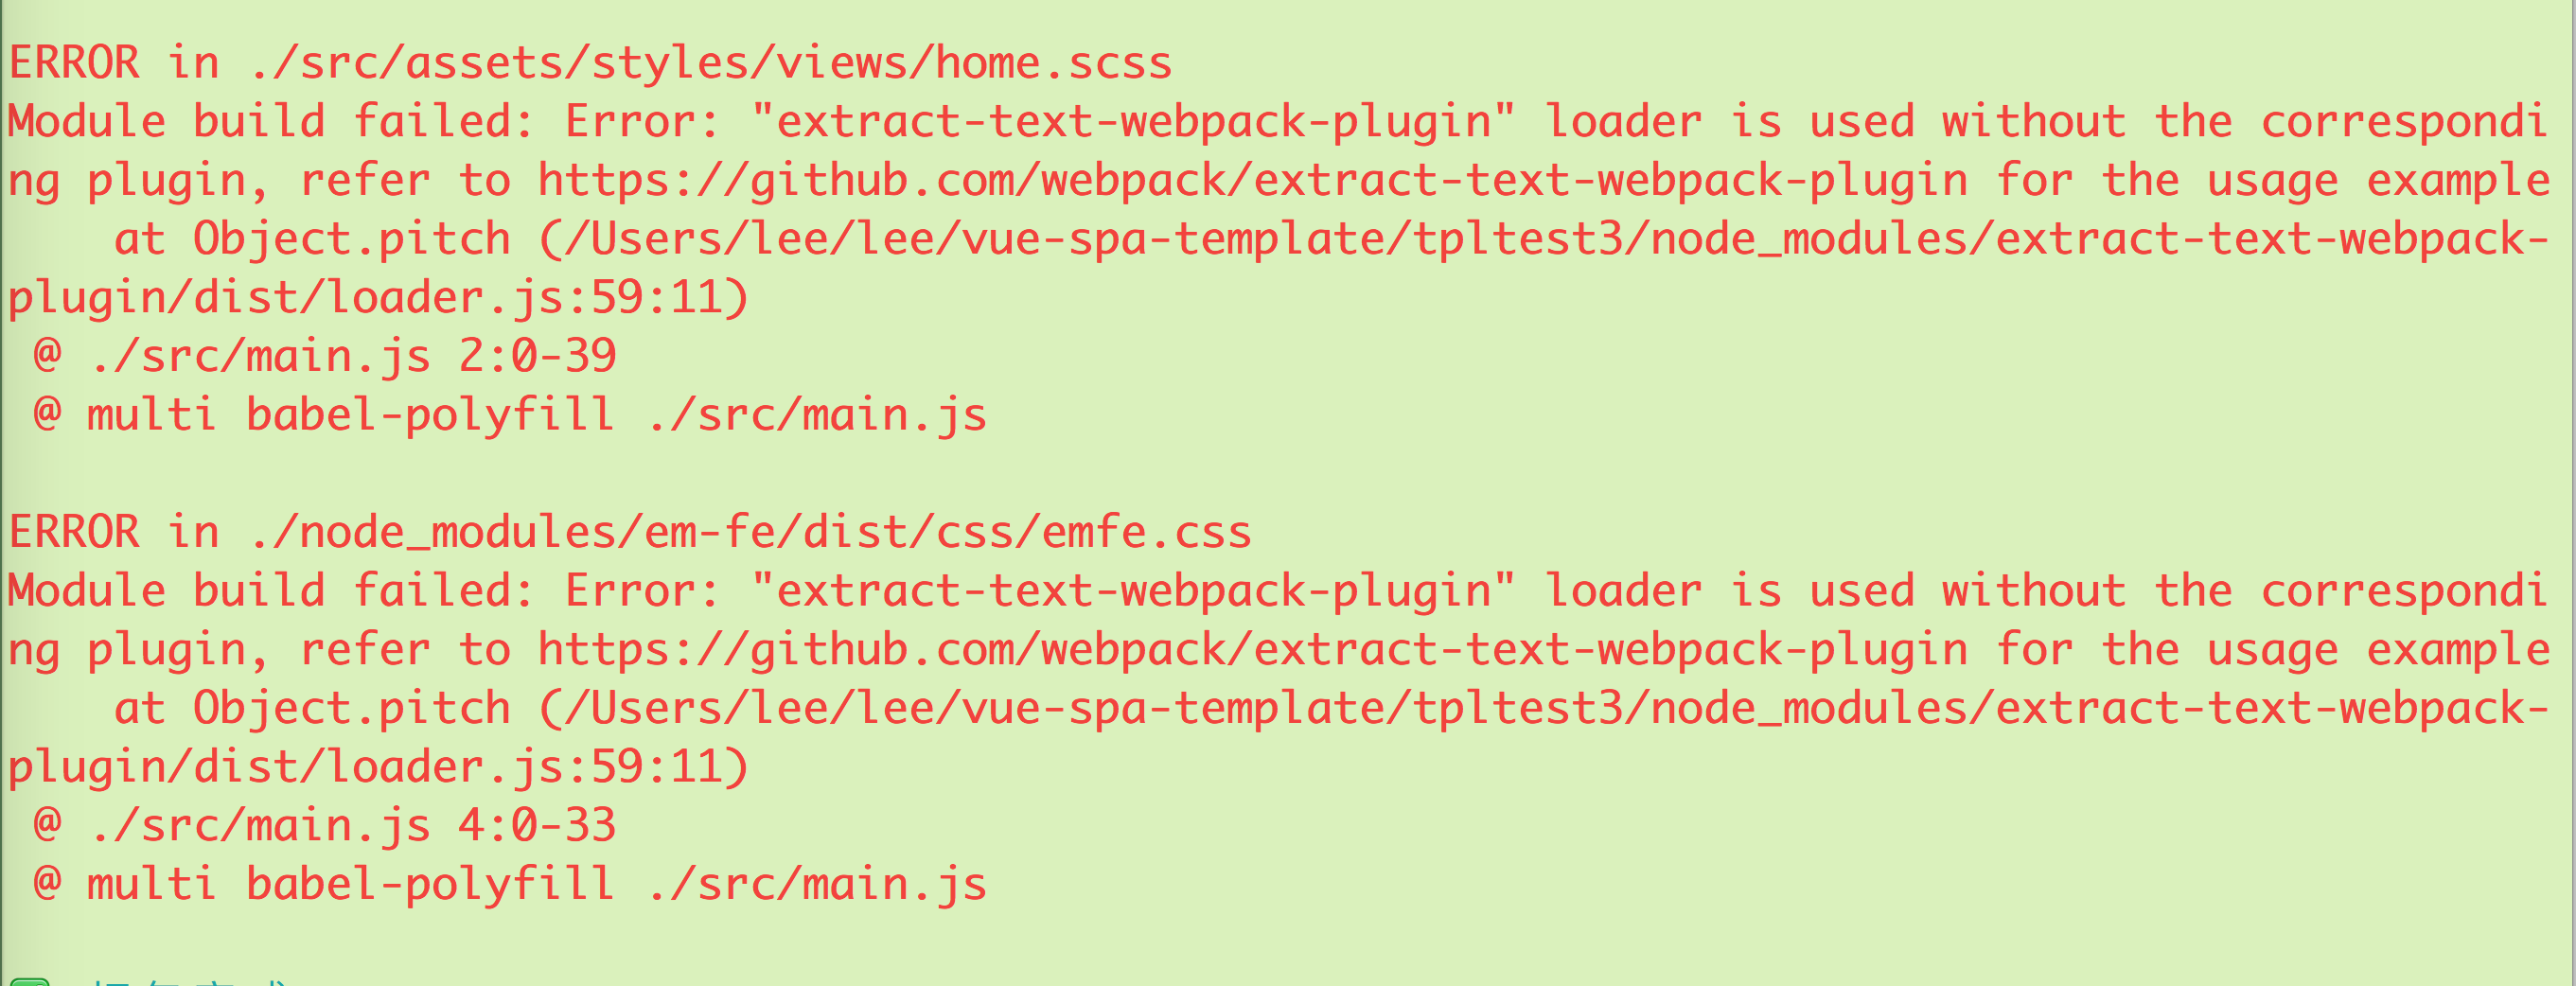 Module build failed: Error: "extract-text-webpack-plugin" loader